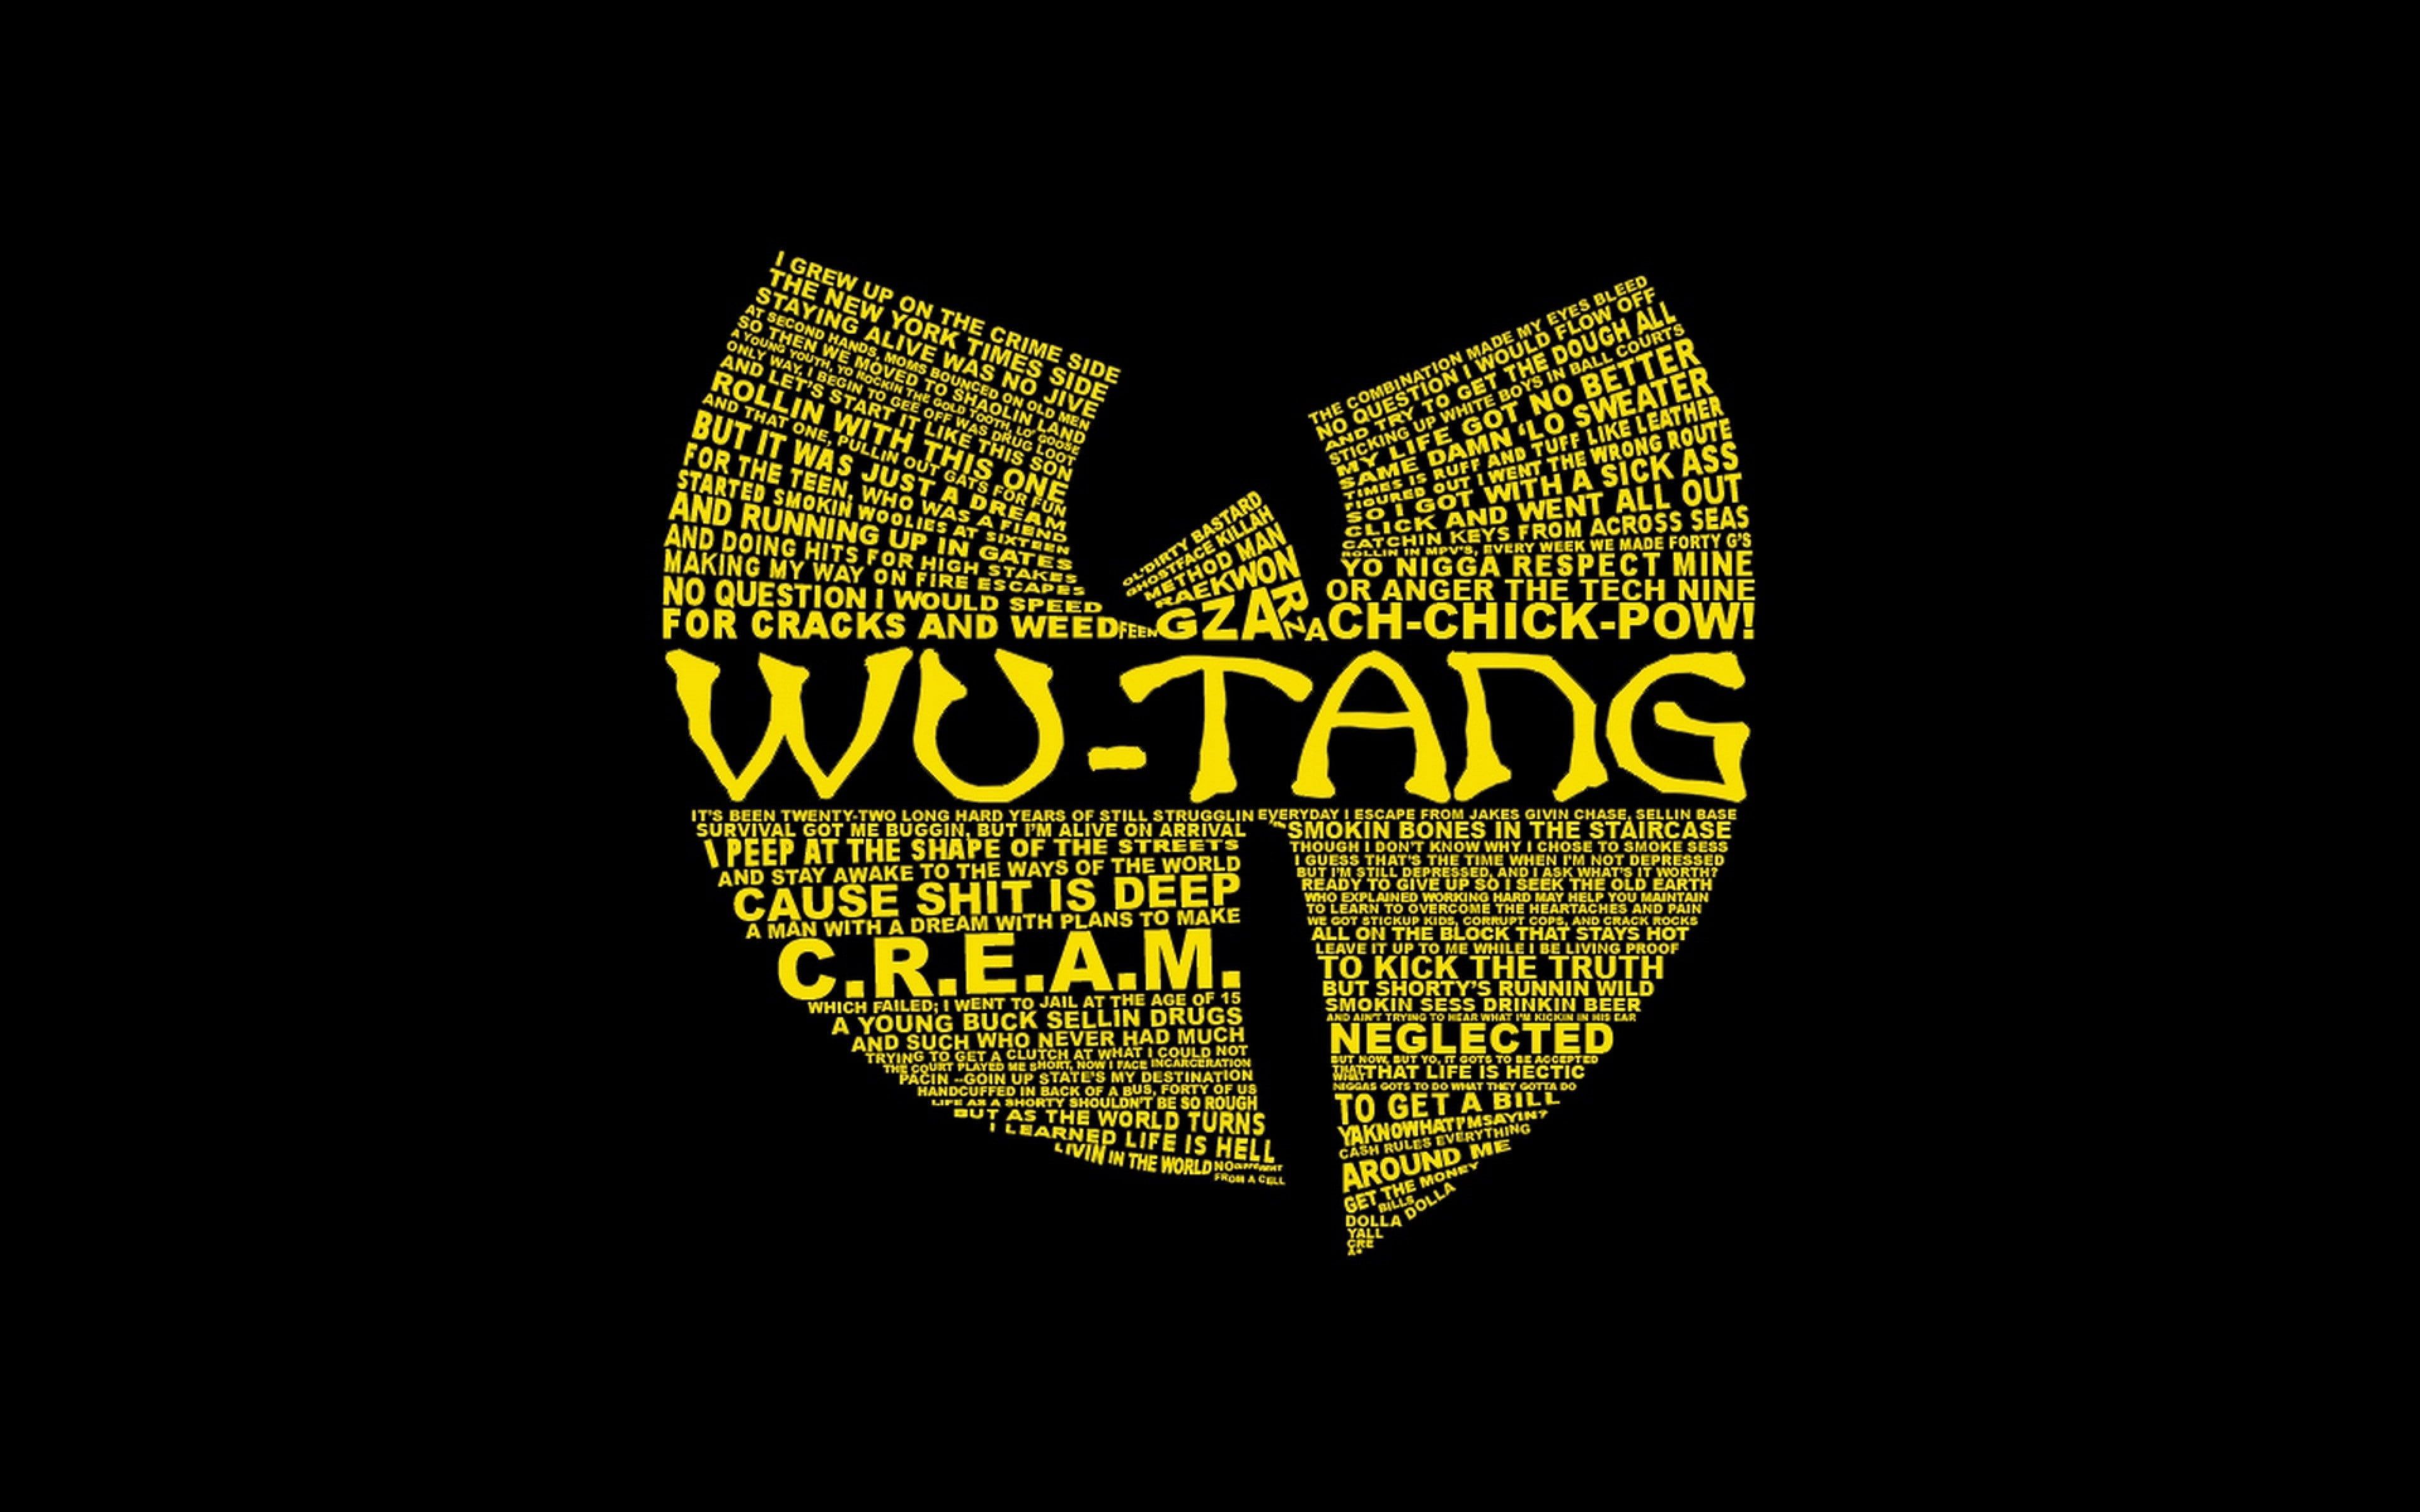 Download 3840x2400 Music hip hop #Rap Wu tang #Clan Background Ultra HD 4K # 4K #wallpaper #hdwallpaper #desktop. Wu tang, Wu tang clan logo, Wu tang clan